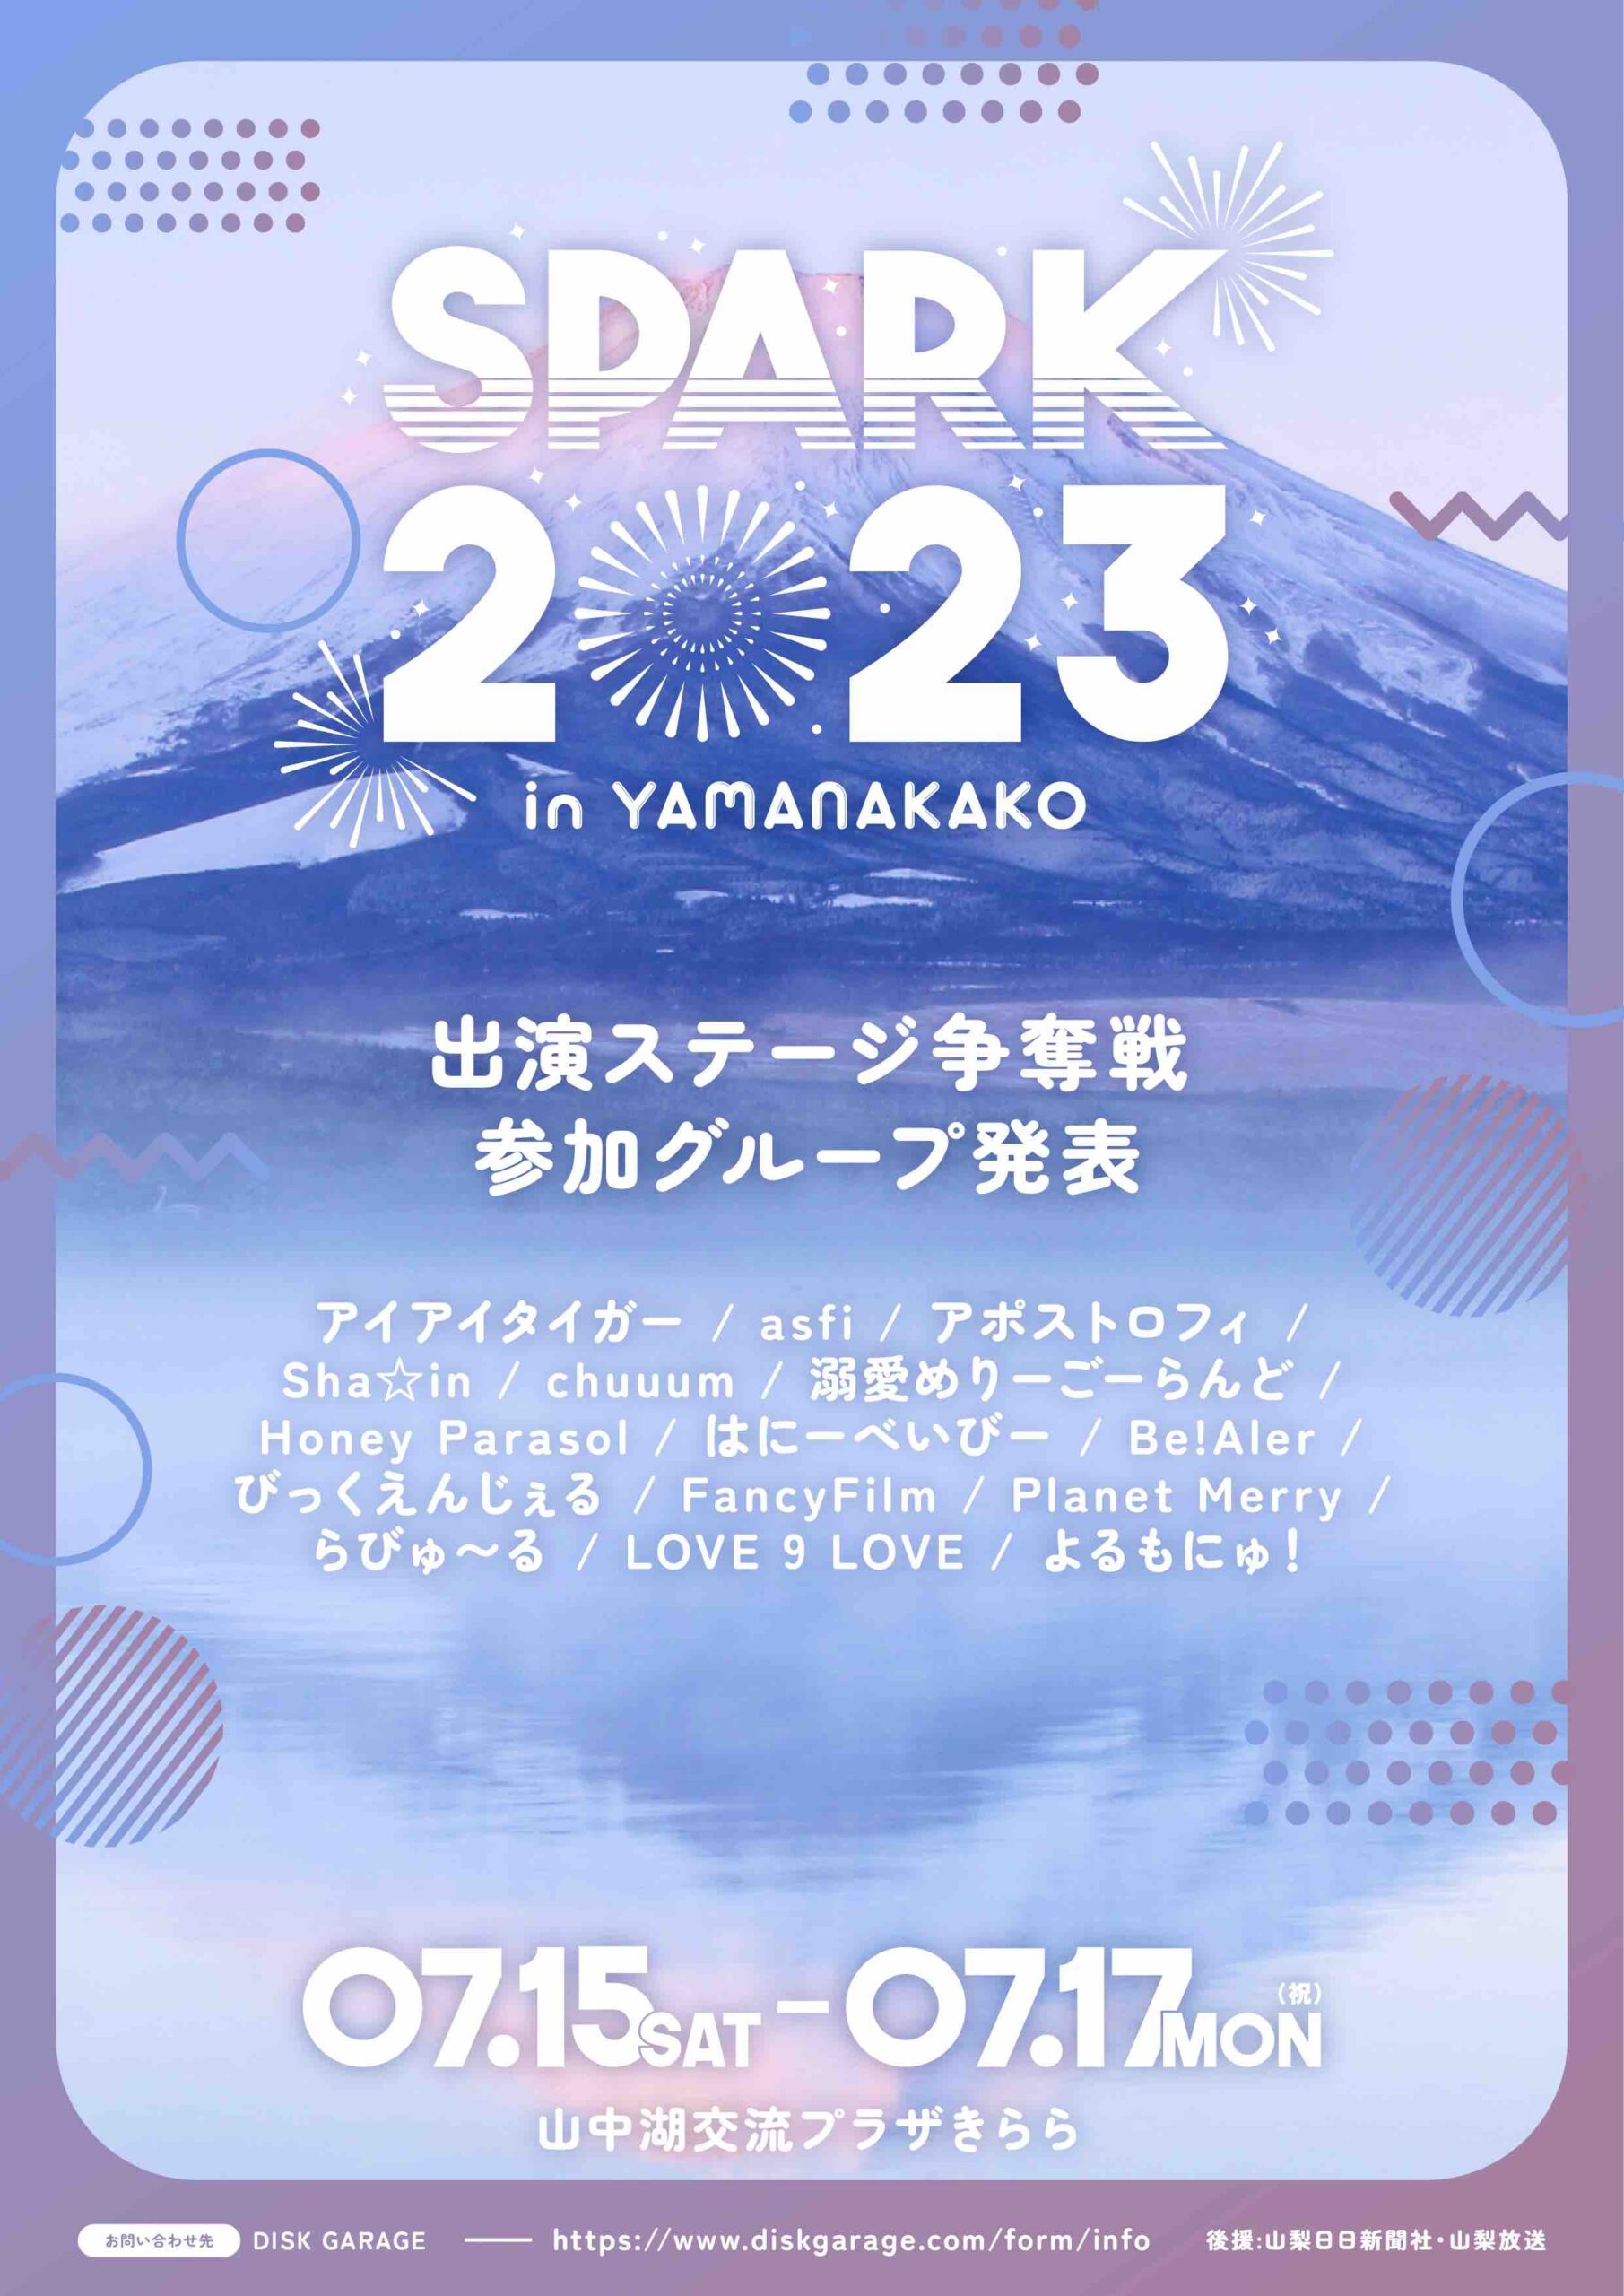 SPARK! 2023 in YAMANAKAKO 出演権争奪イベント